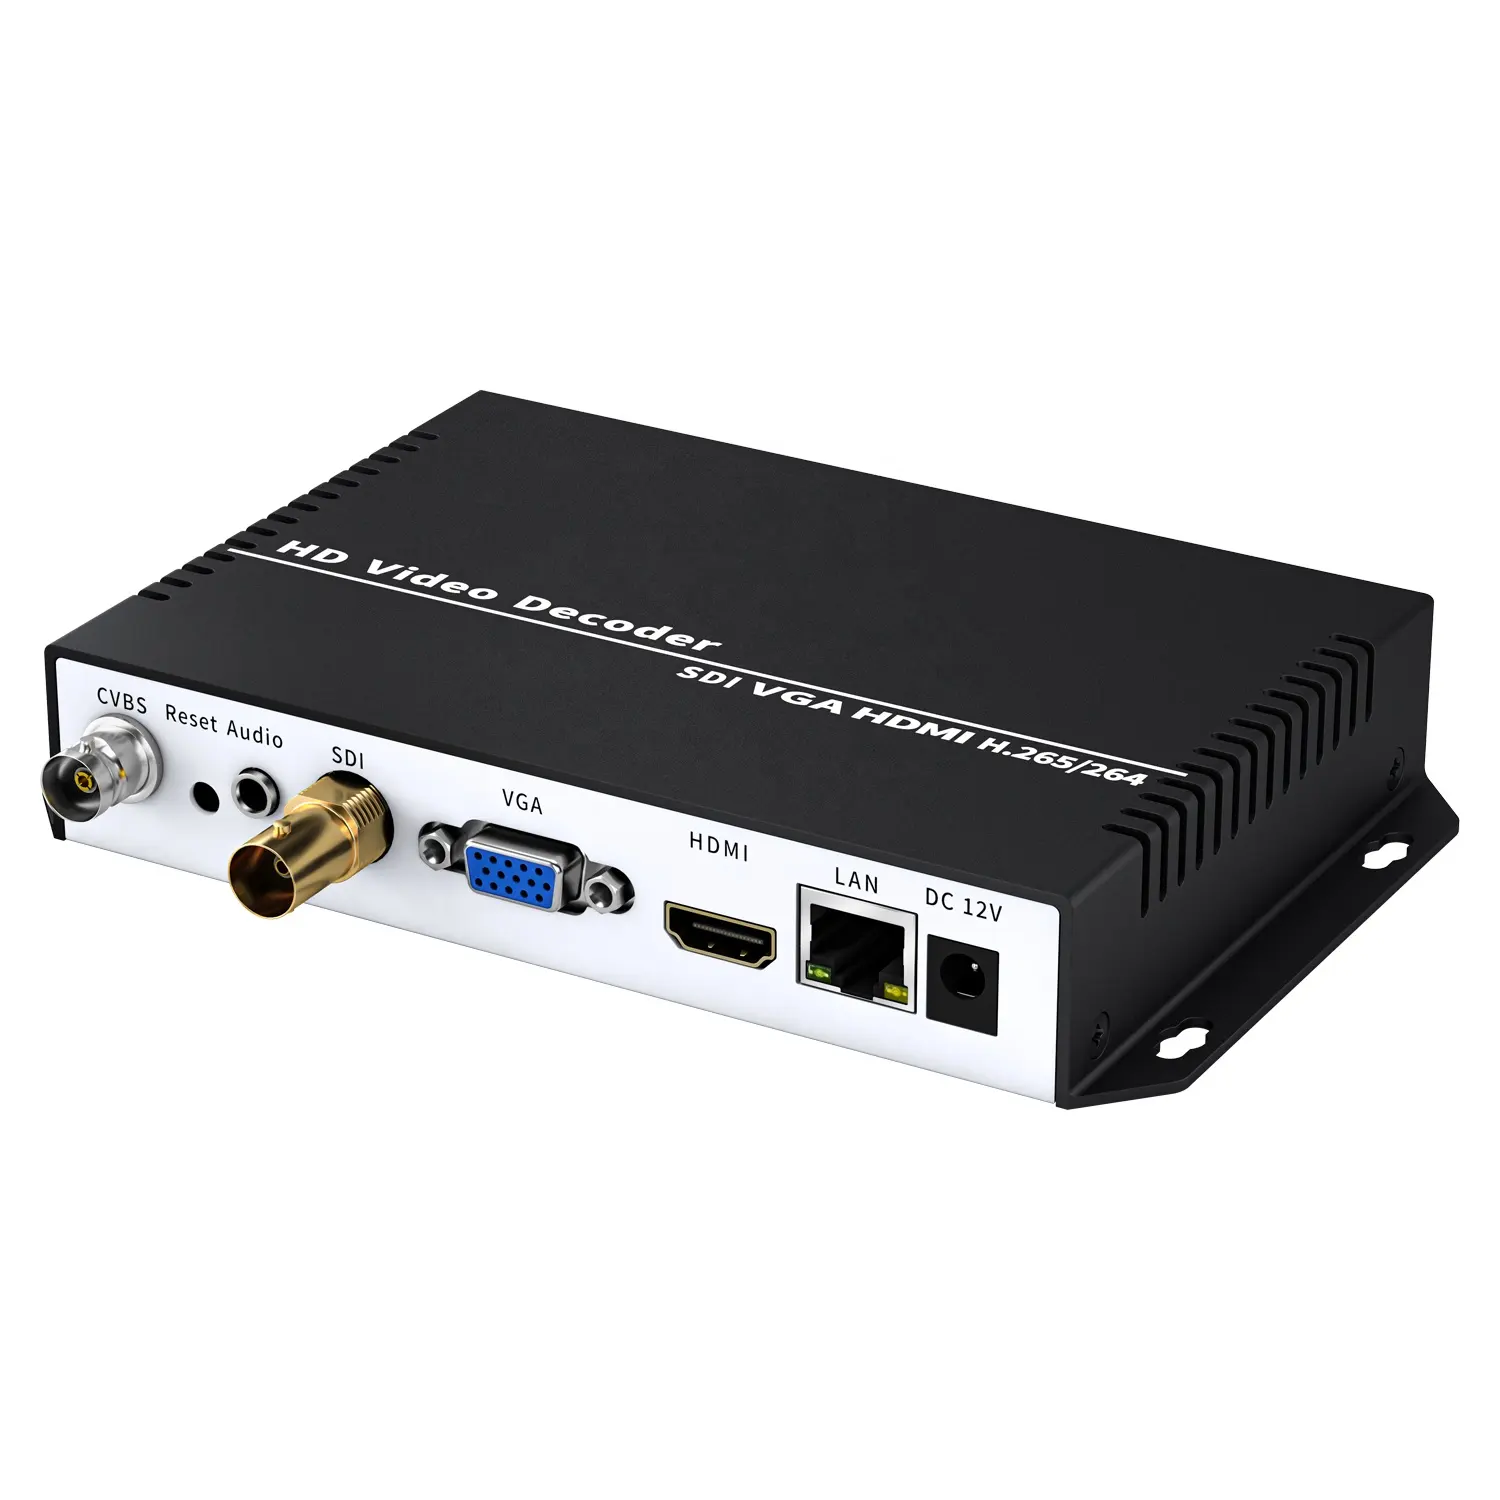 Unisheen SRT RTMP RTSP Multi View SDI 4K H.265 H.264ビデオデコーダートップボックスプレーヤーVGAHDMI出力